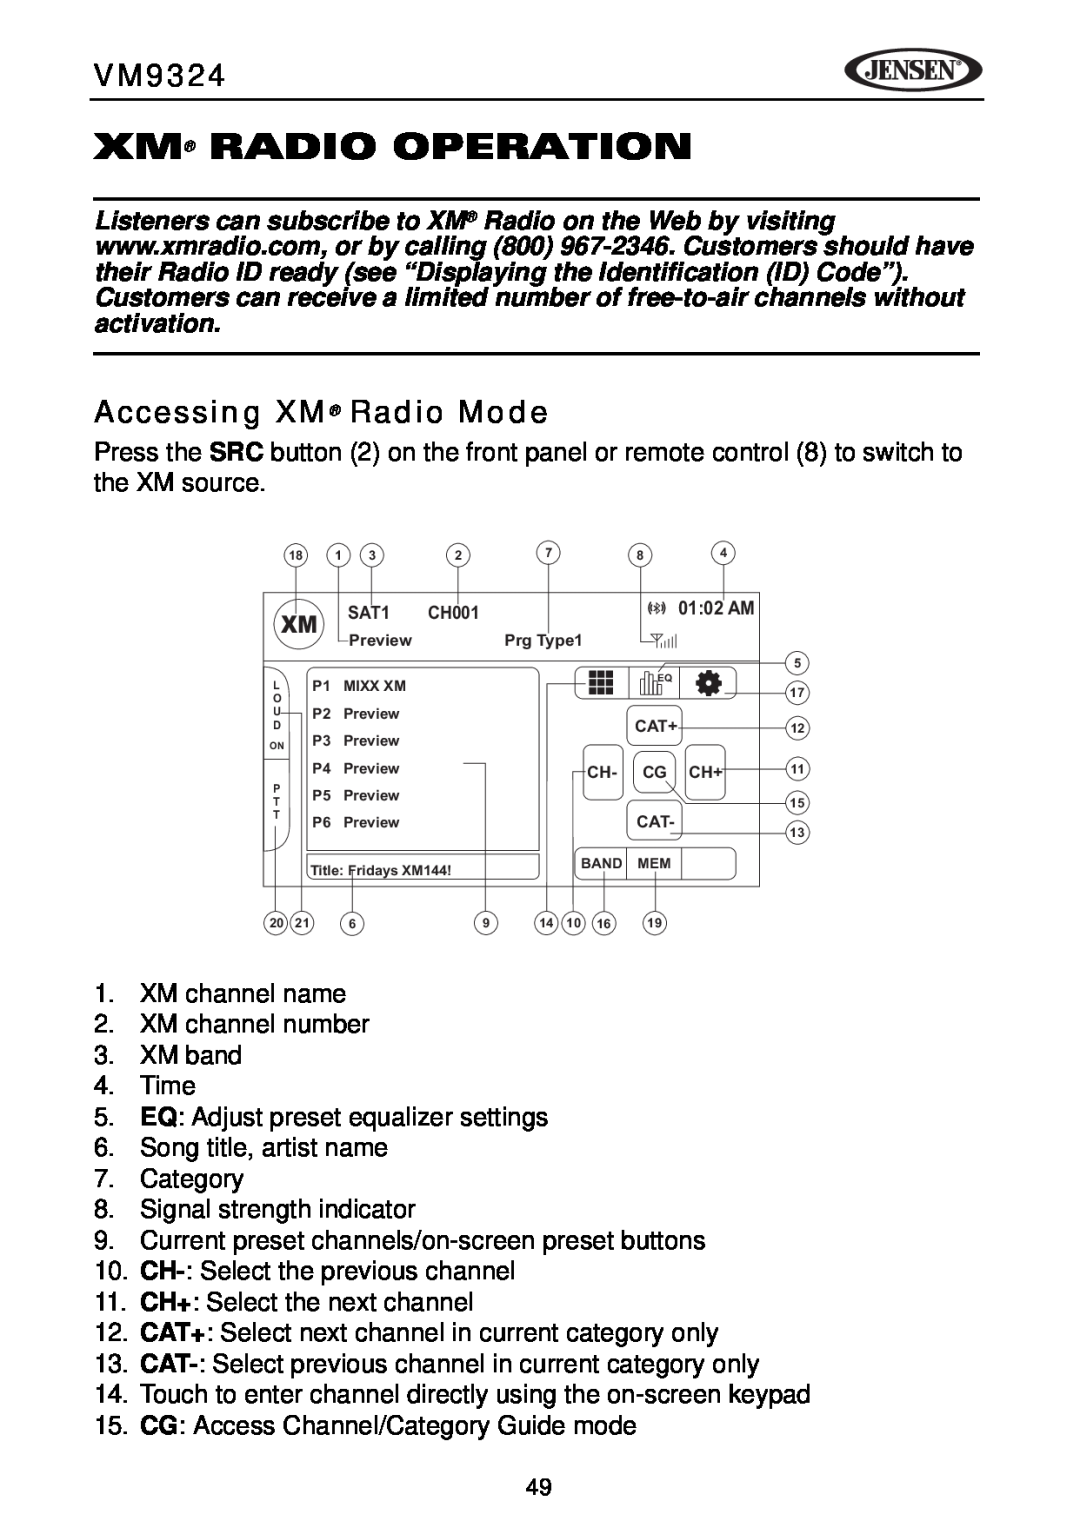 Jensen VM9324 manual Xm Radio Operation, Accessing XM Radio Mode 